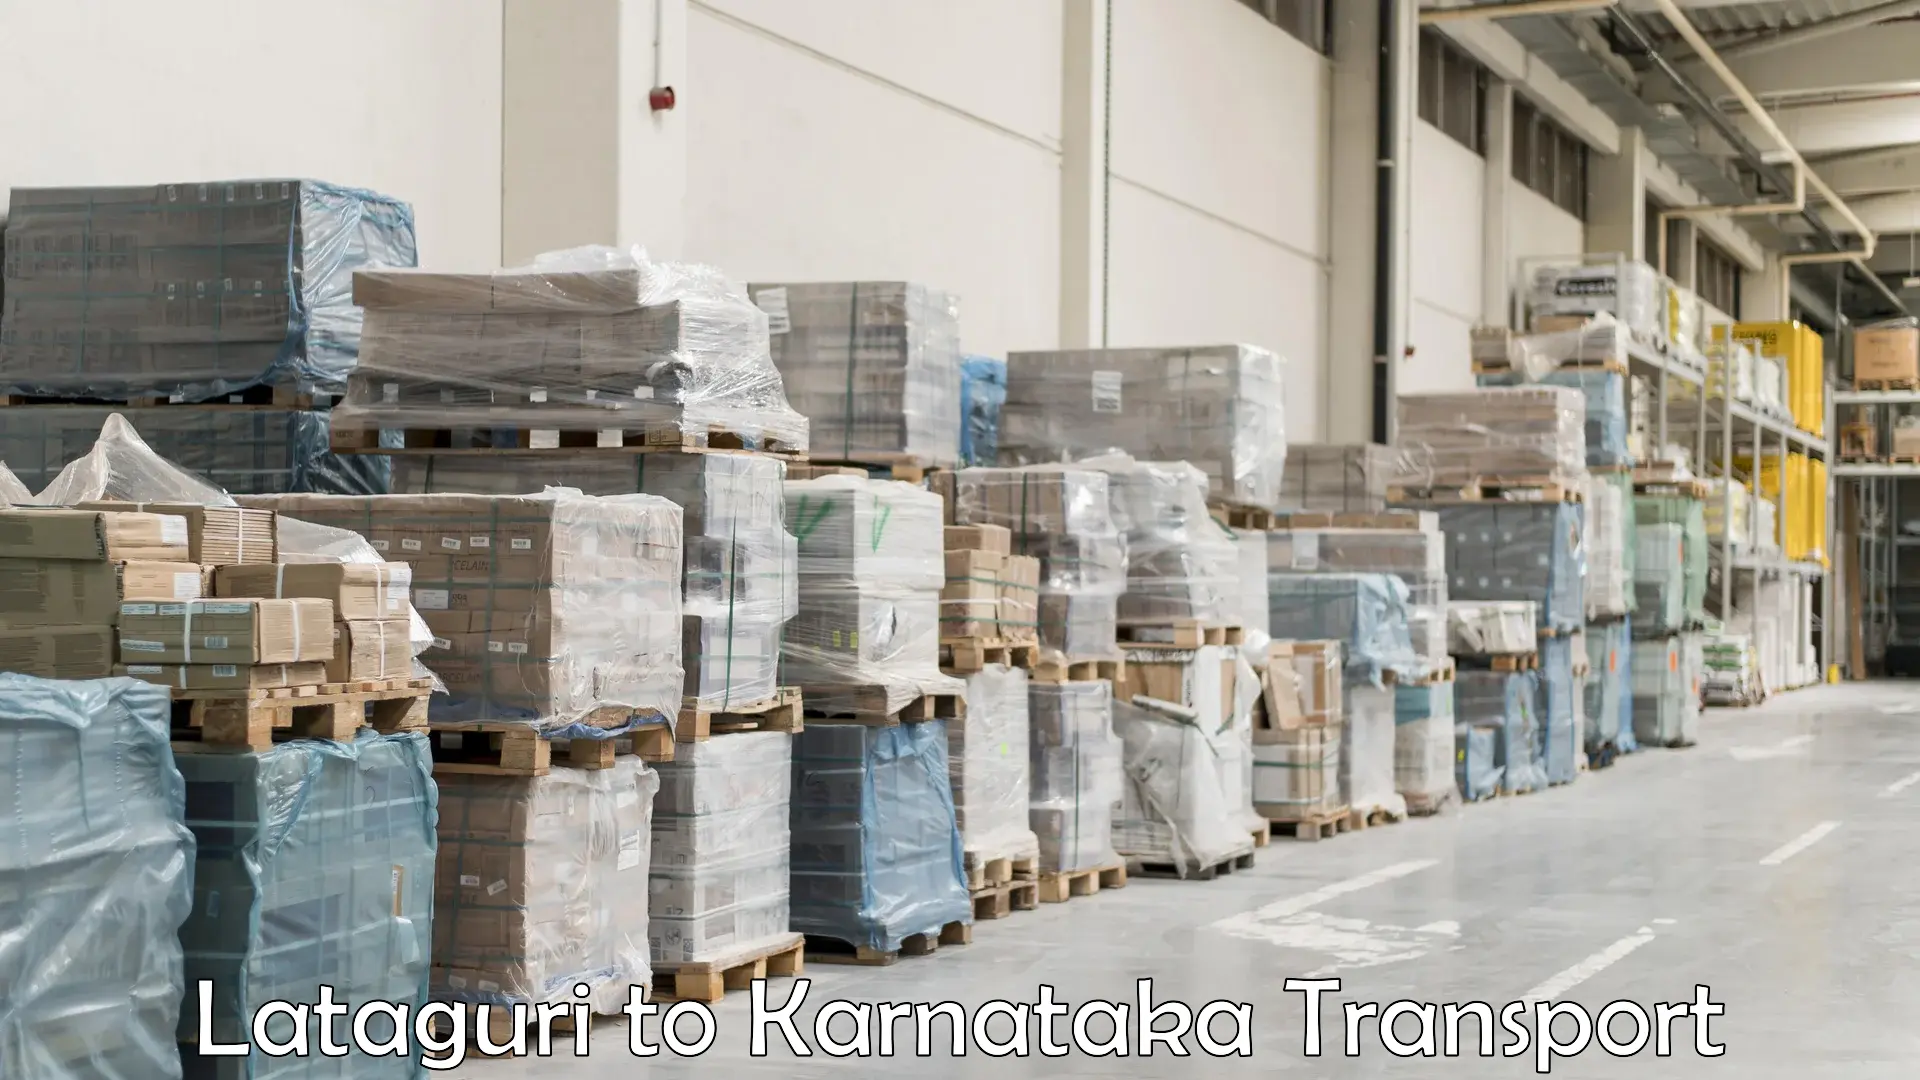 Truck transport companies in India Lataguri to Karnataka